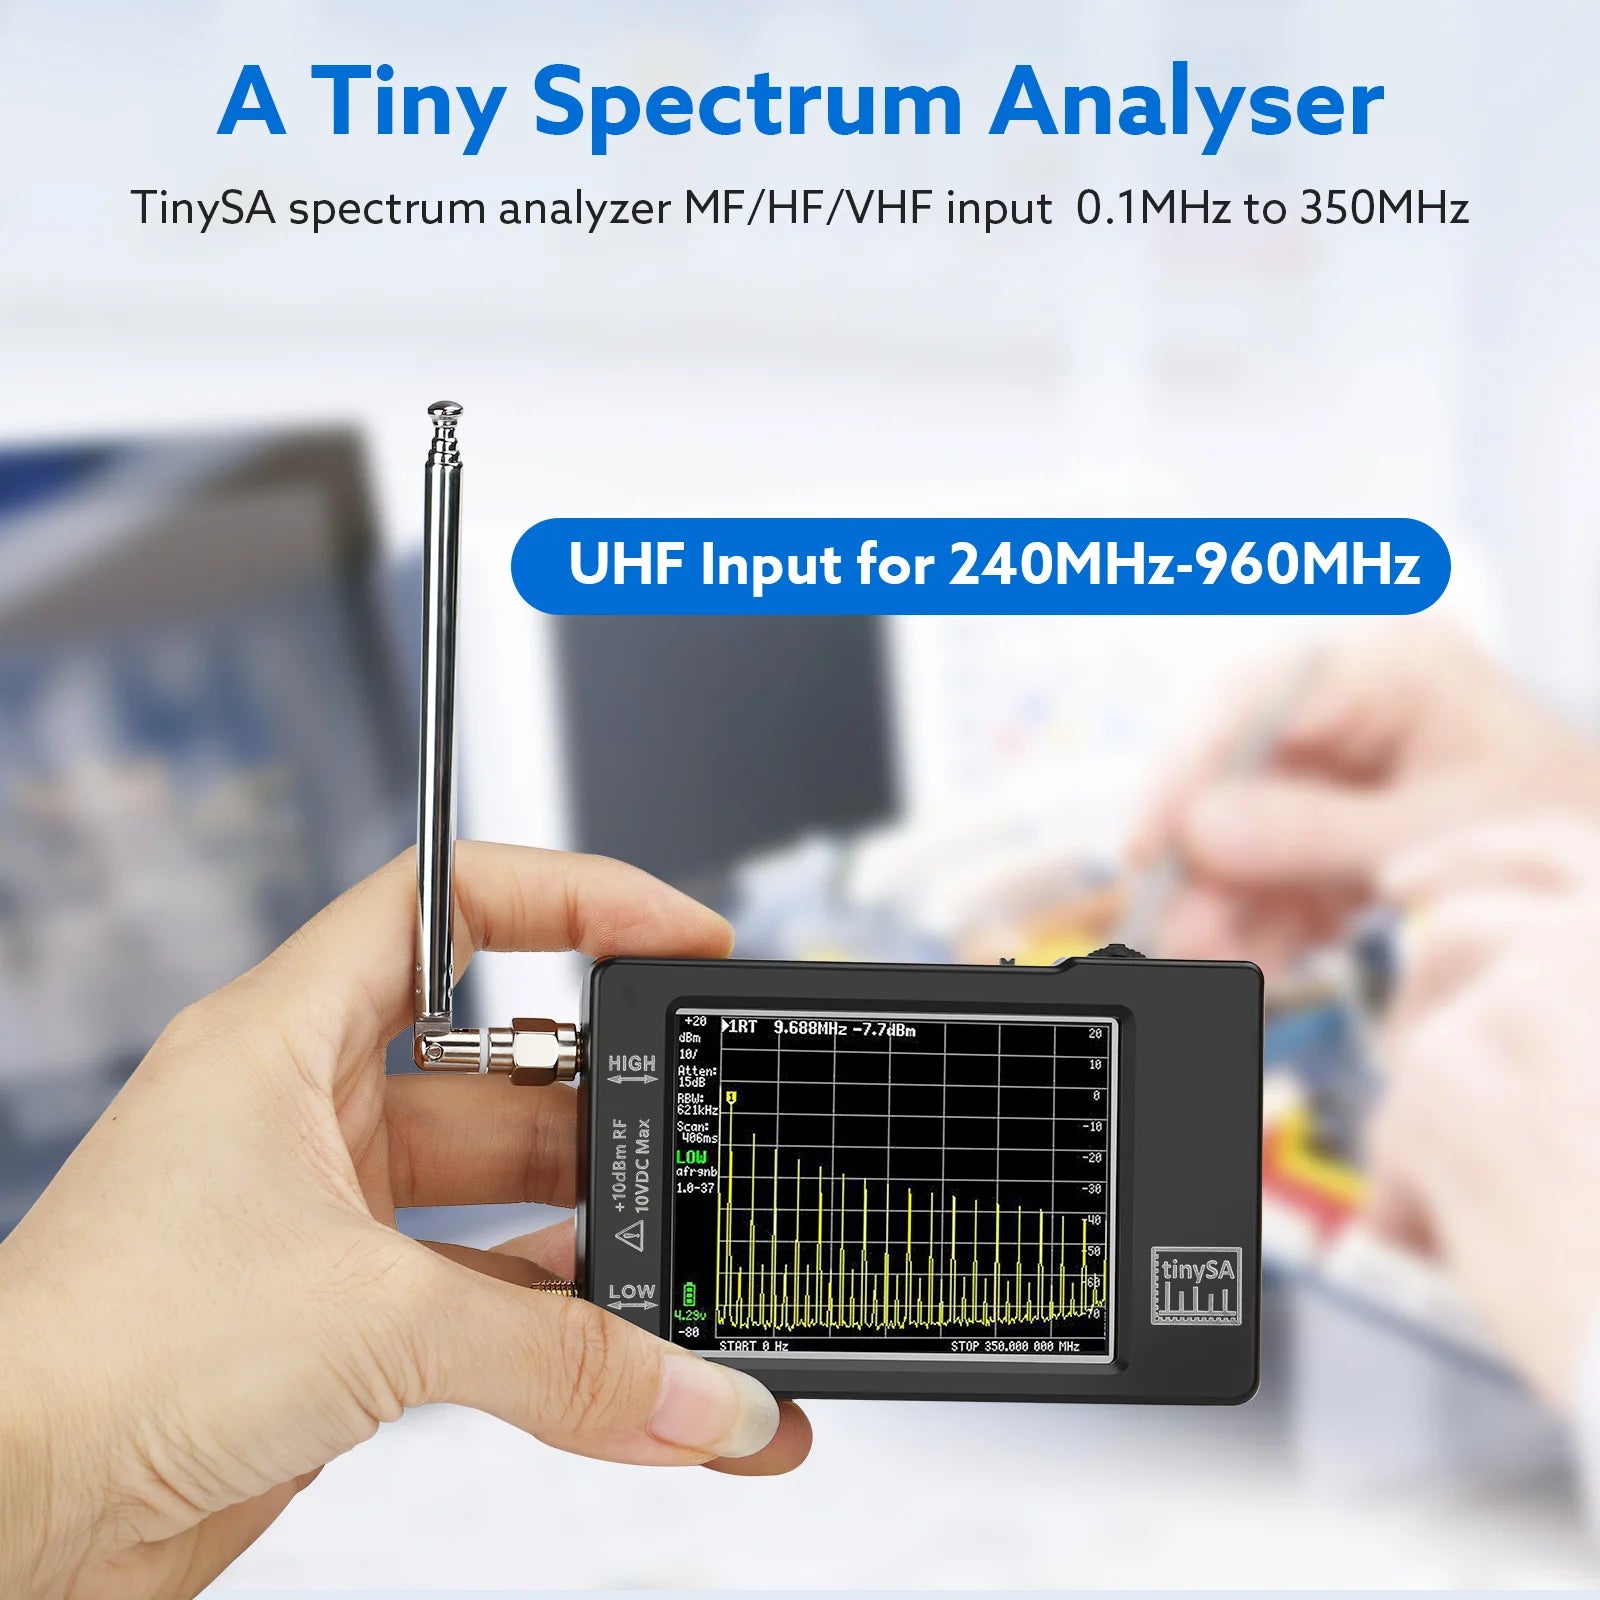 Upgraded Hand held tiny Spectrum analyzer TinySA 2.8" display 100kHz to 960MHz with ESD proteced Version V0.3.1_E